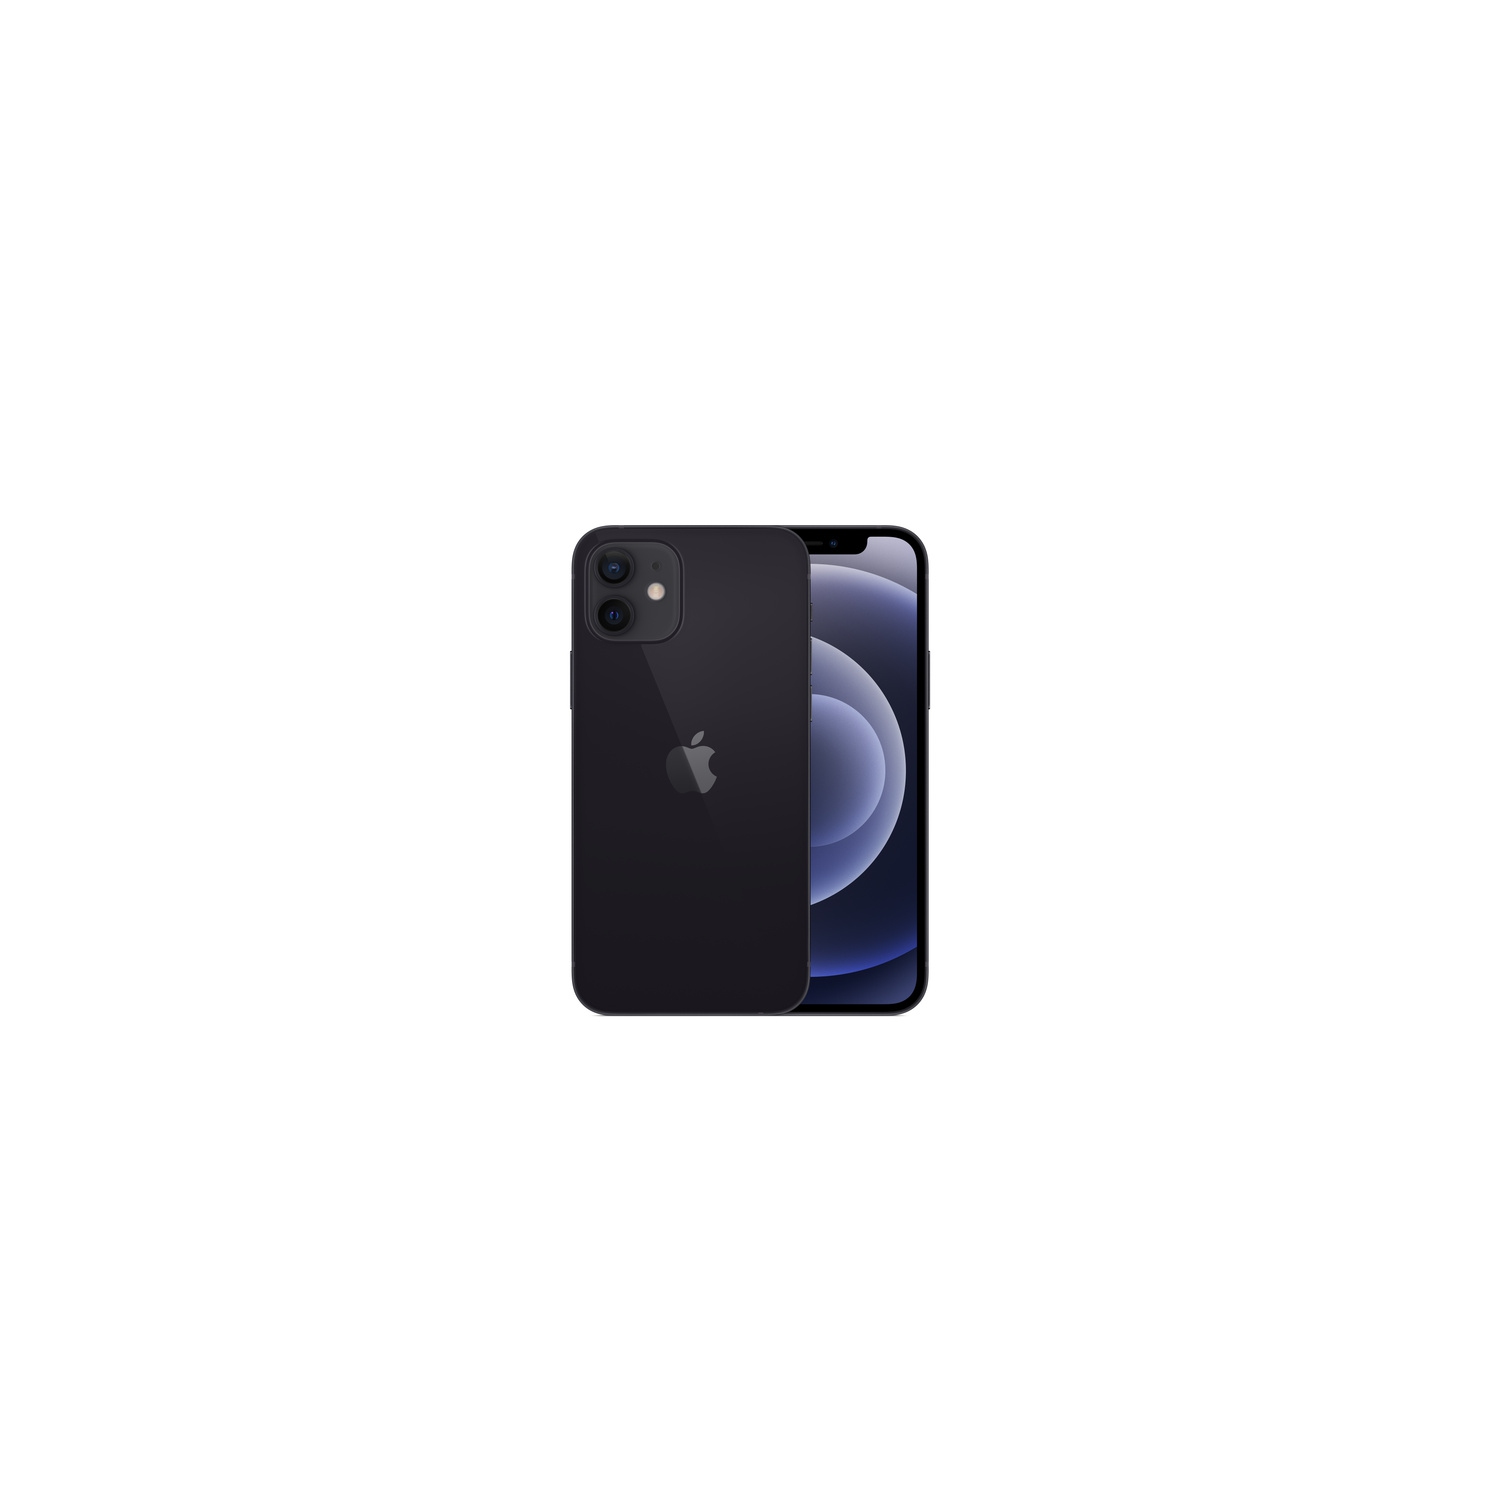 Apple iPhone 12 A2172 (US Version, 64GB, Black) - Sealed